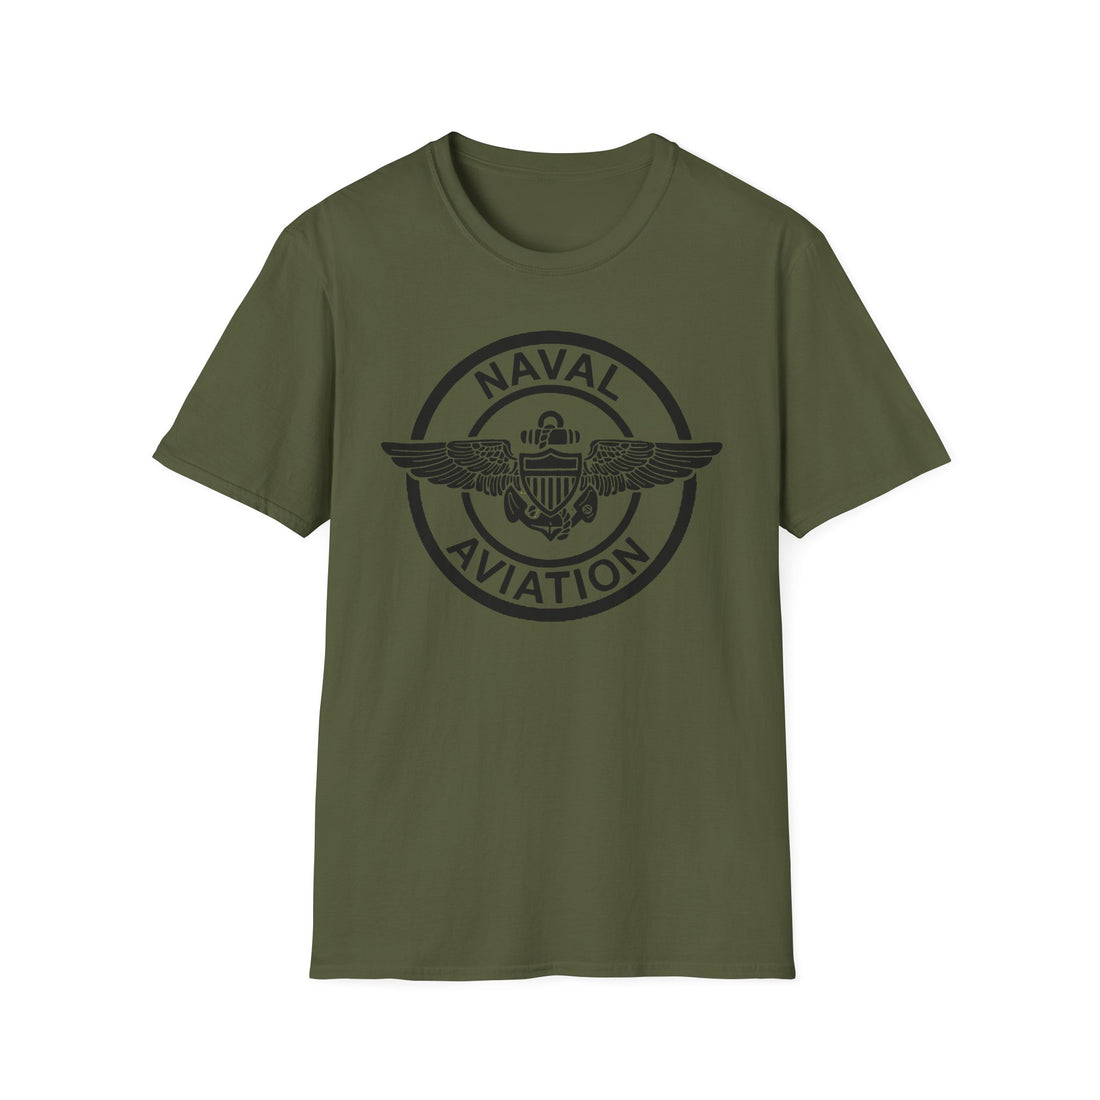 Naval Aviation T-Shirt, Veteran, Navy, Naval Aviator, Pilot, Military